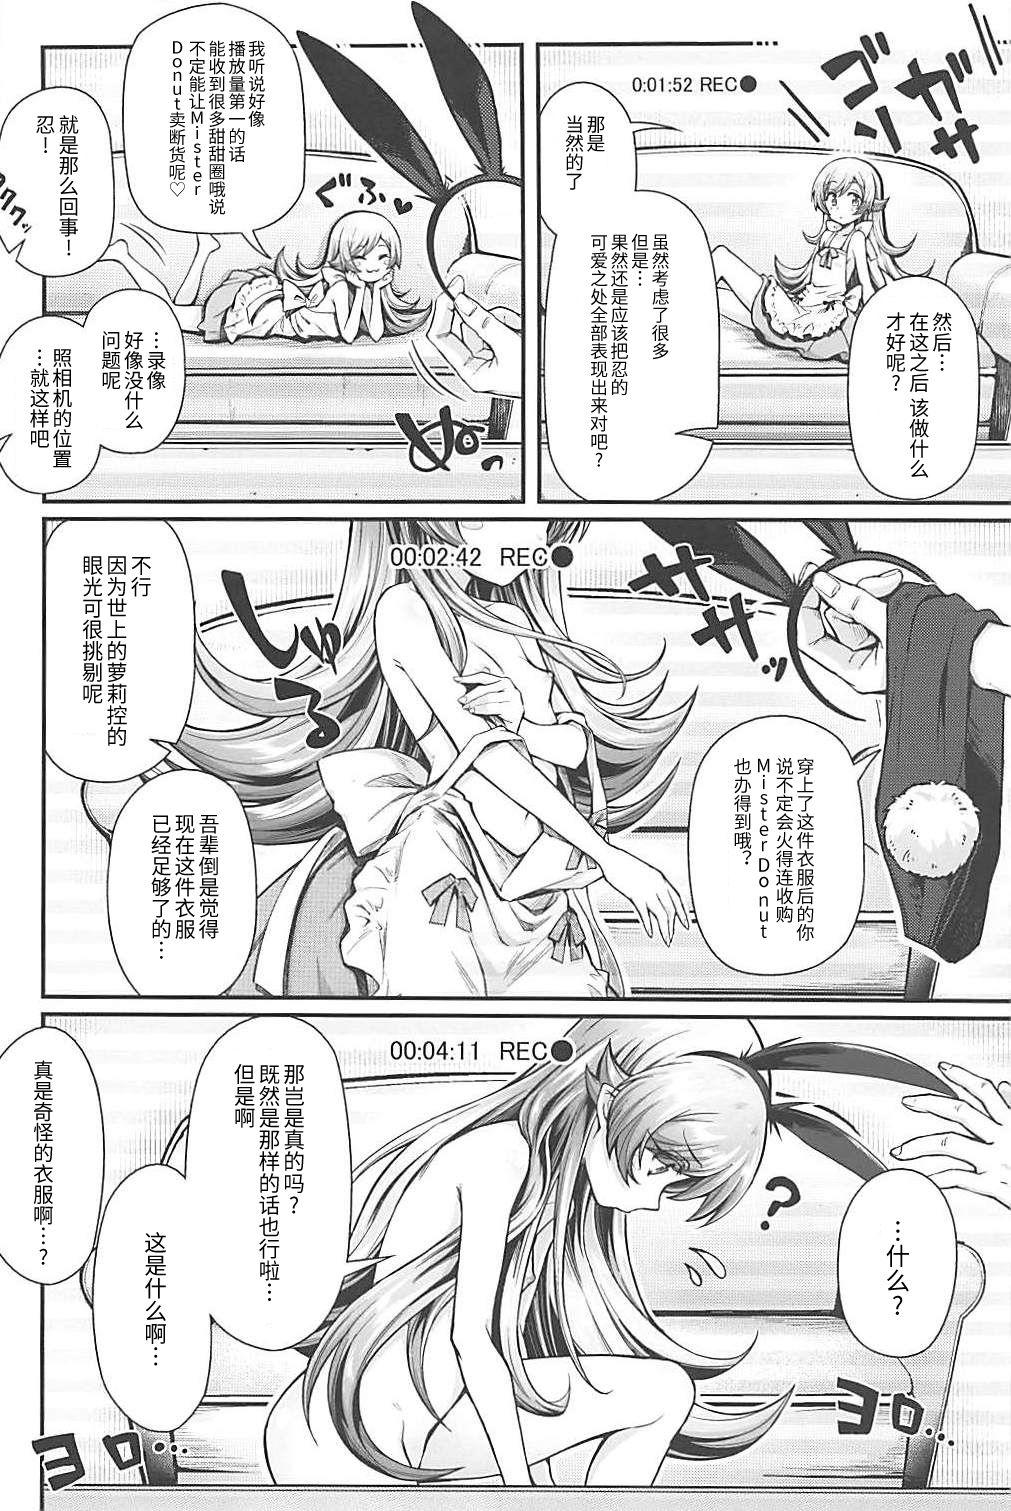 Finger Pachimonogatari Part 16: Shinobu Debut - Bakemonogatari Chicks - Page 3